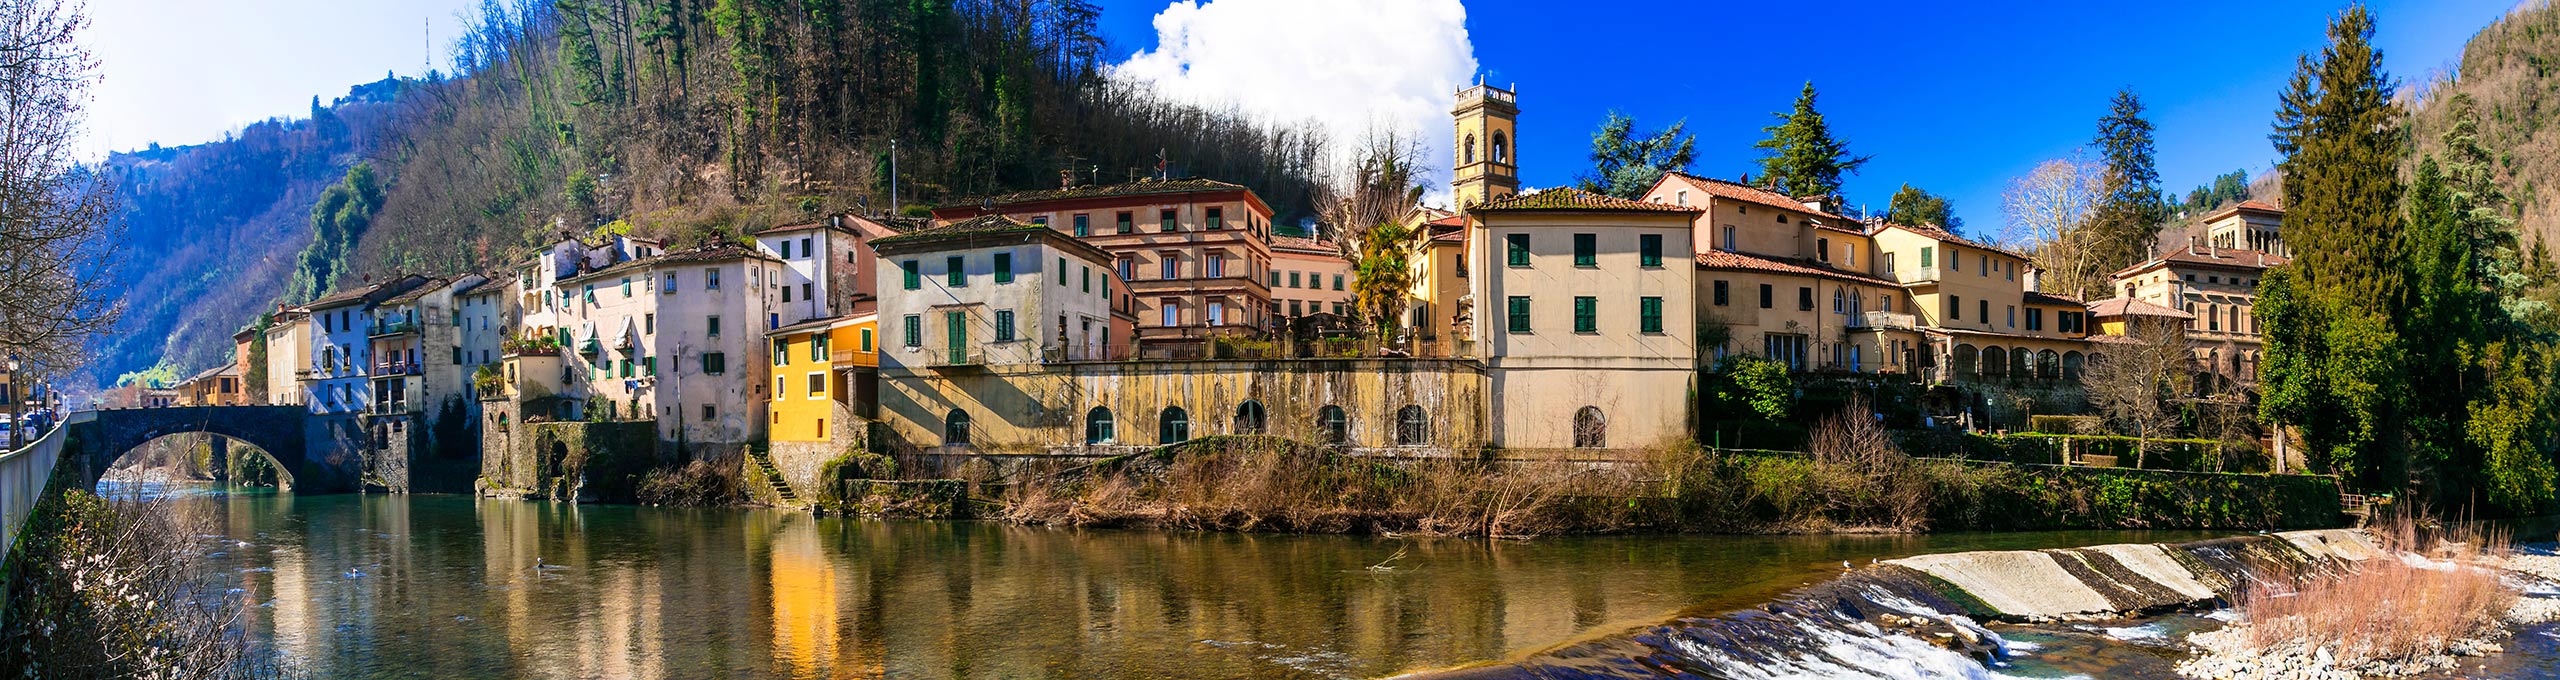 Vacanze a Bagni di Lucca Ponte - Visit Italy